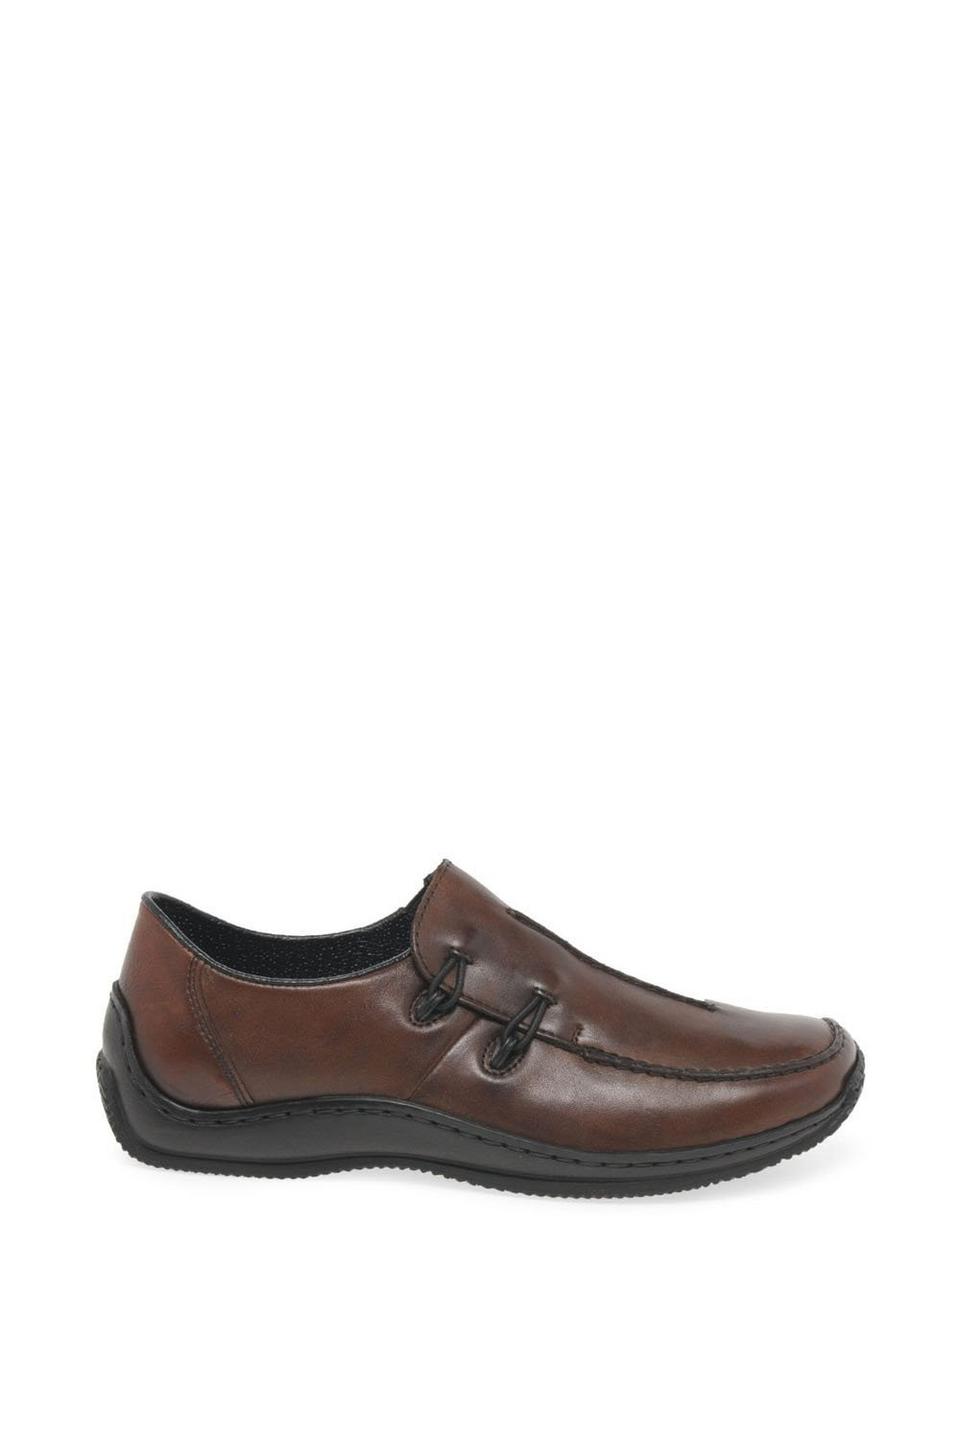 Flats | 'Celia' Leather Casual Shoe | Rieker